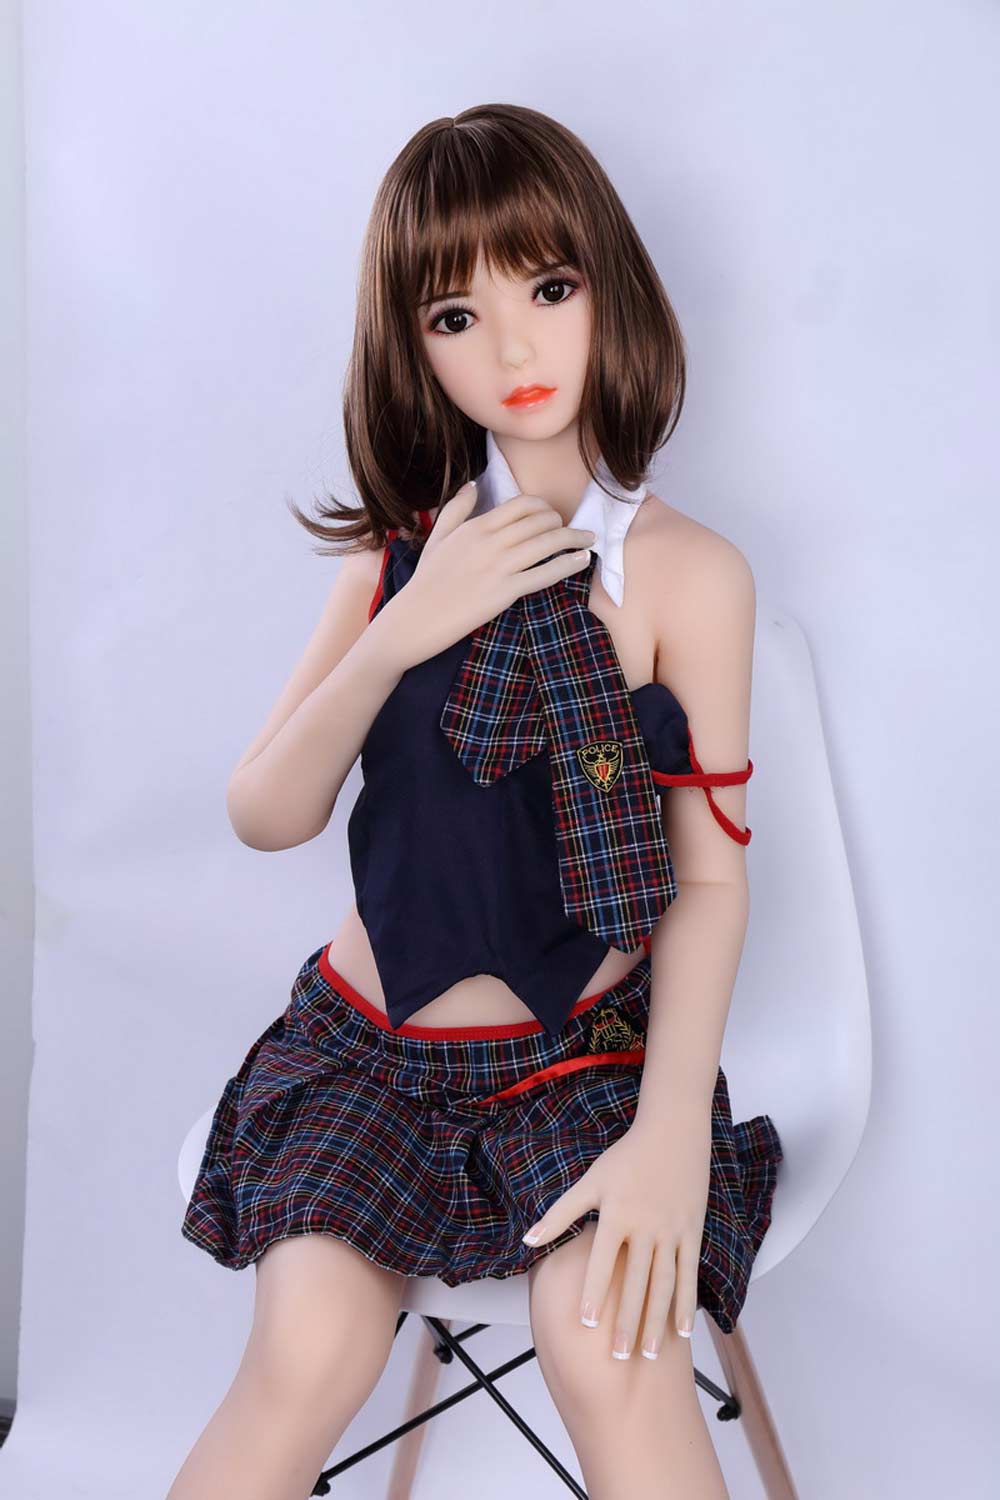 A mini sex doll in a plaid pleated skirt